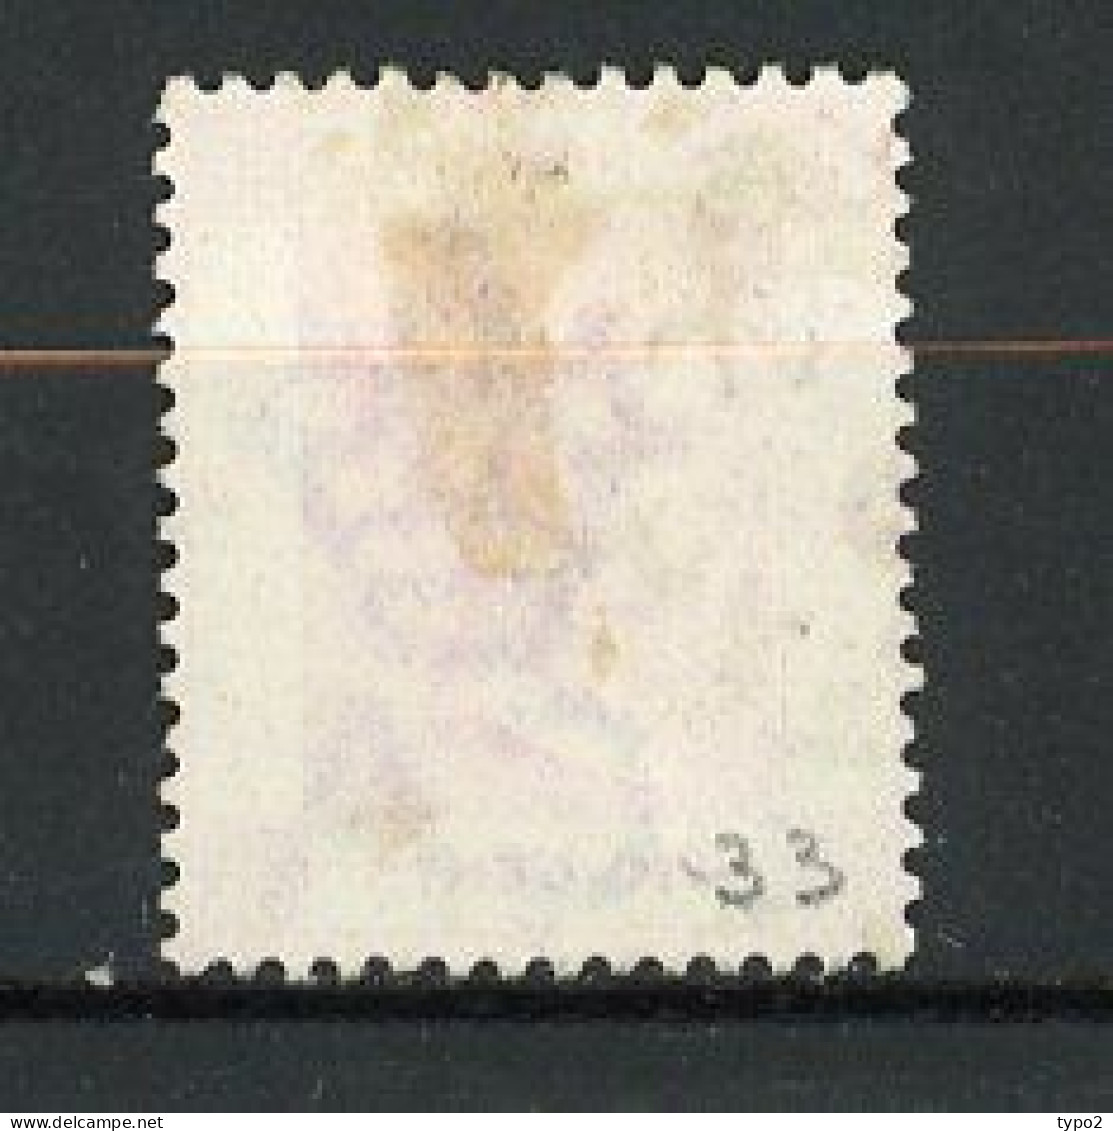 H-K  Yv. N° 33 ; SG N° 33 Fil CA (o)  2c Rose Carminé  Victoria  Cote  1 Euro BE   2 Scans - Used Stamps